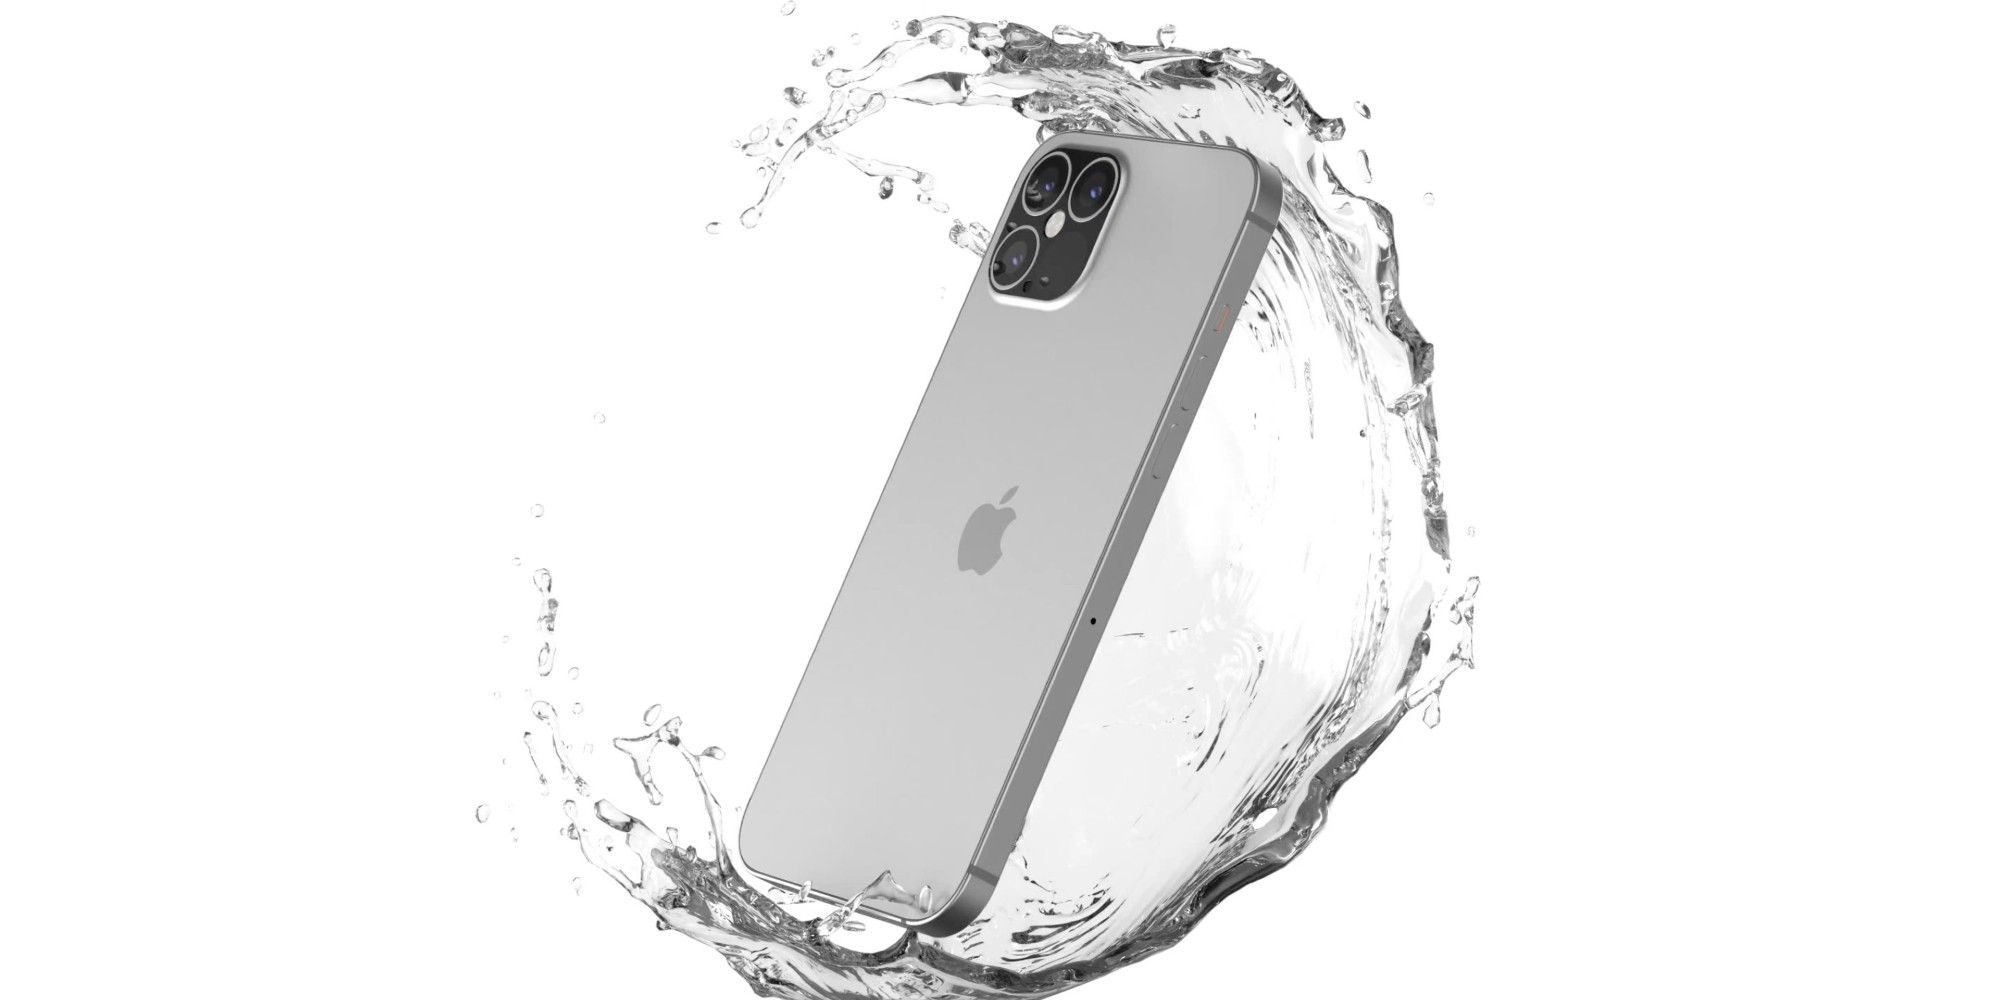 iPhone 12 Pro Max render